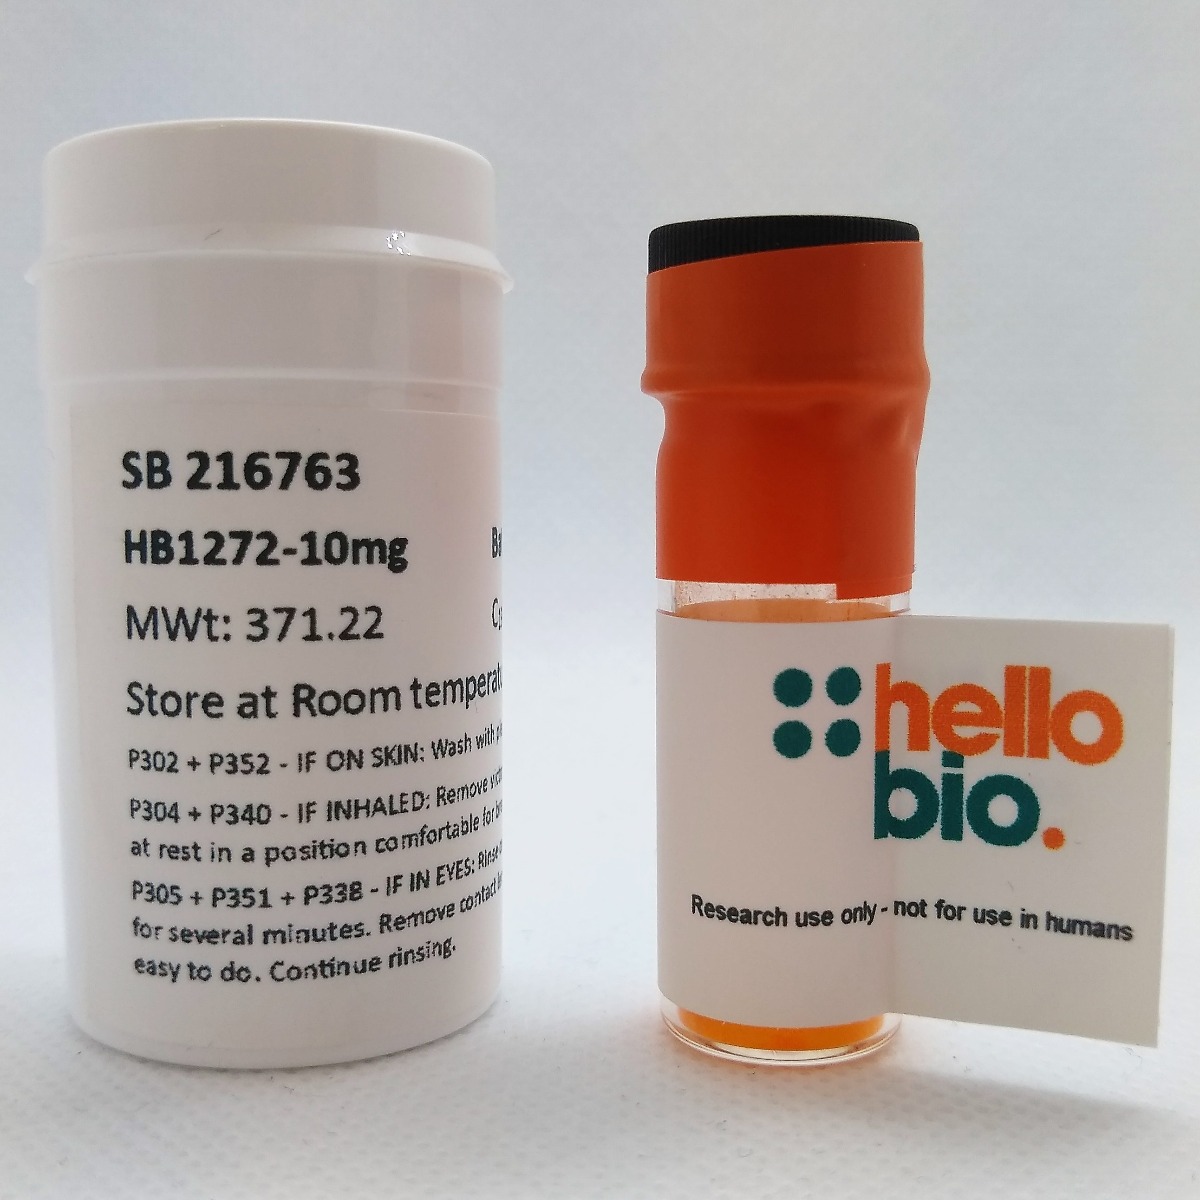 SB 216763 product vial image | Hello Bio